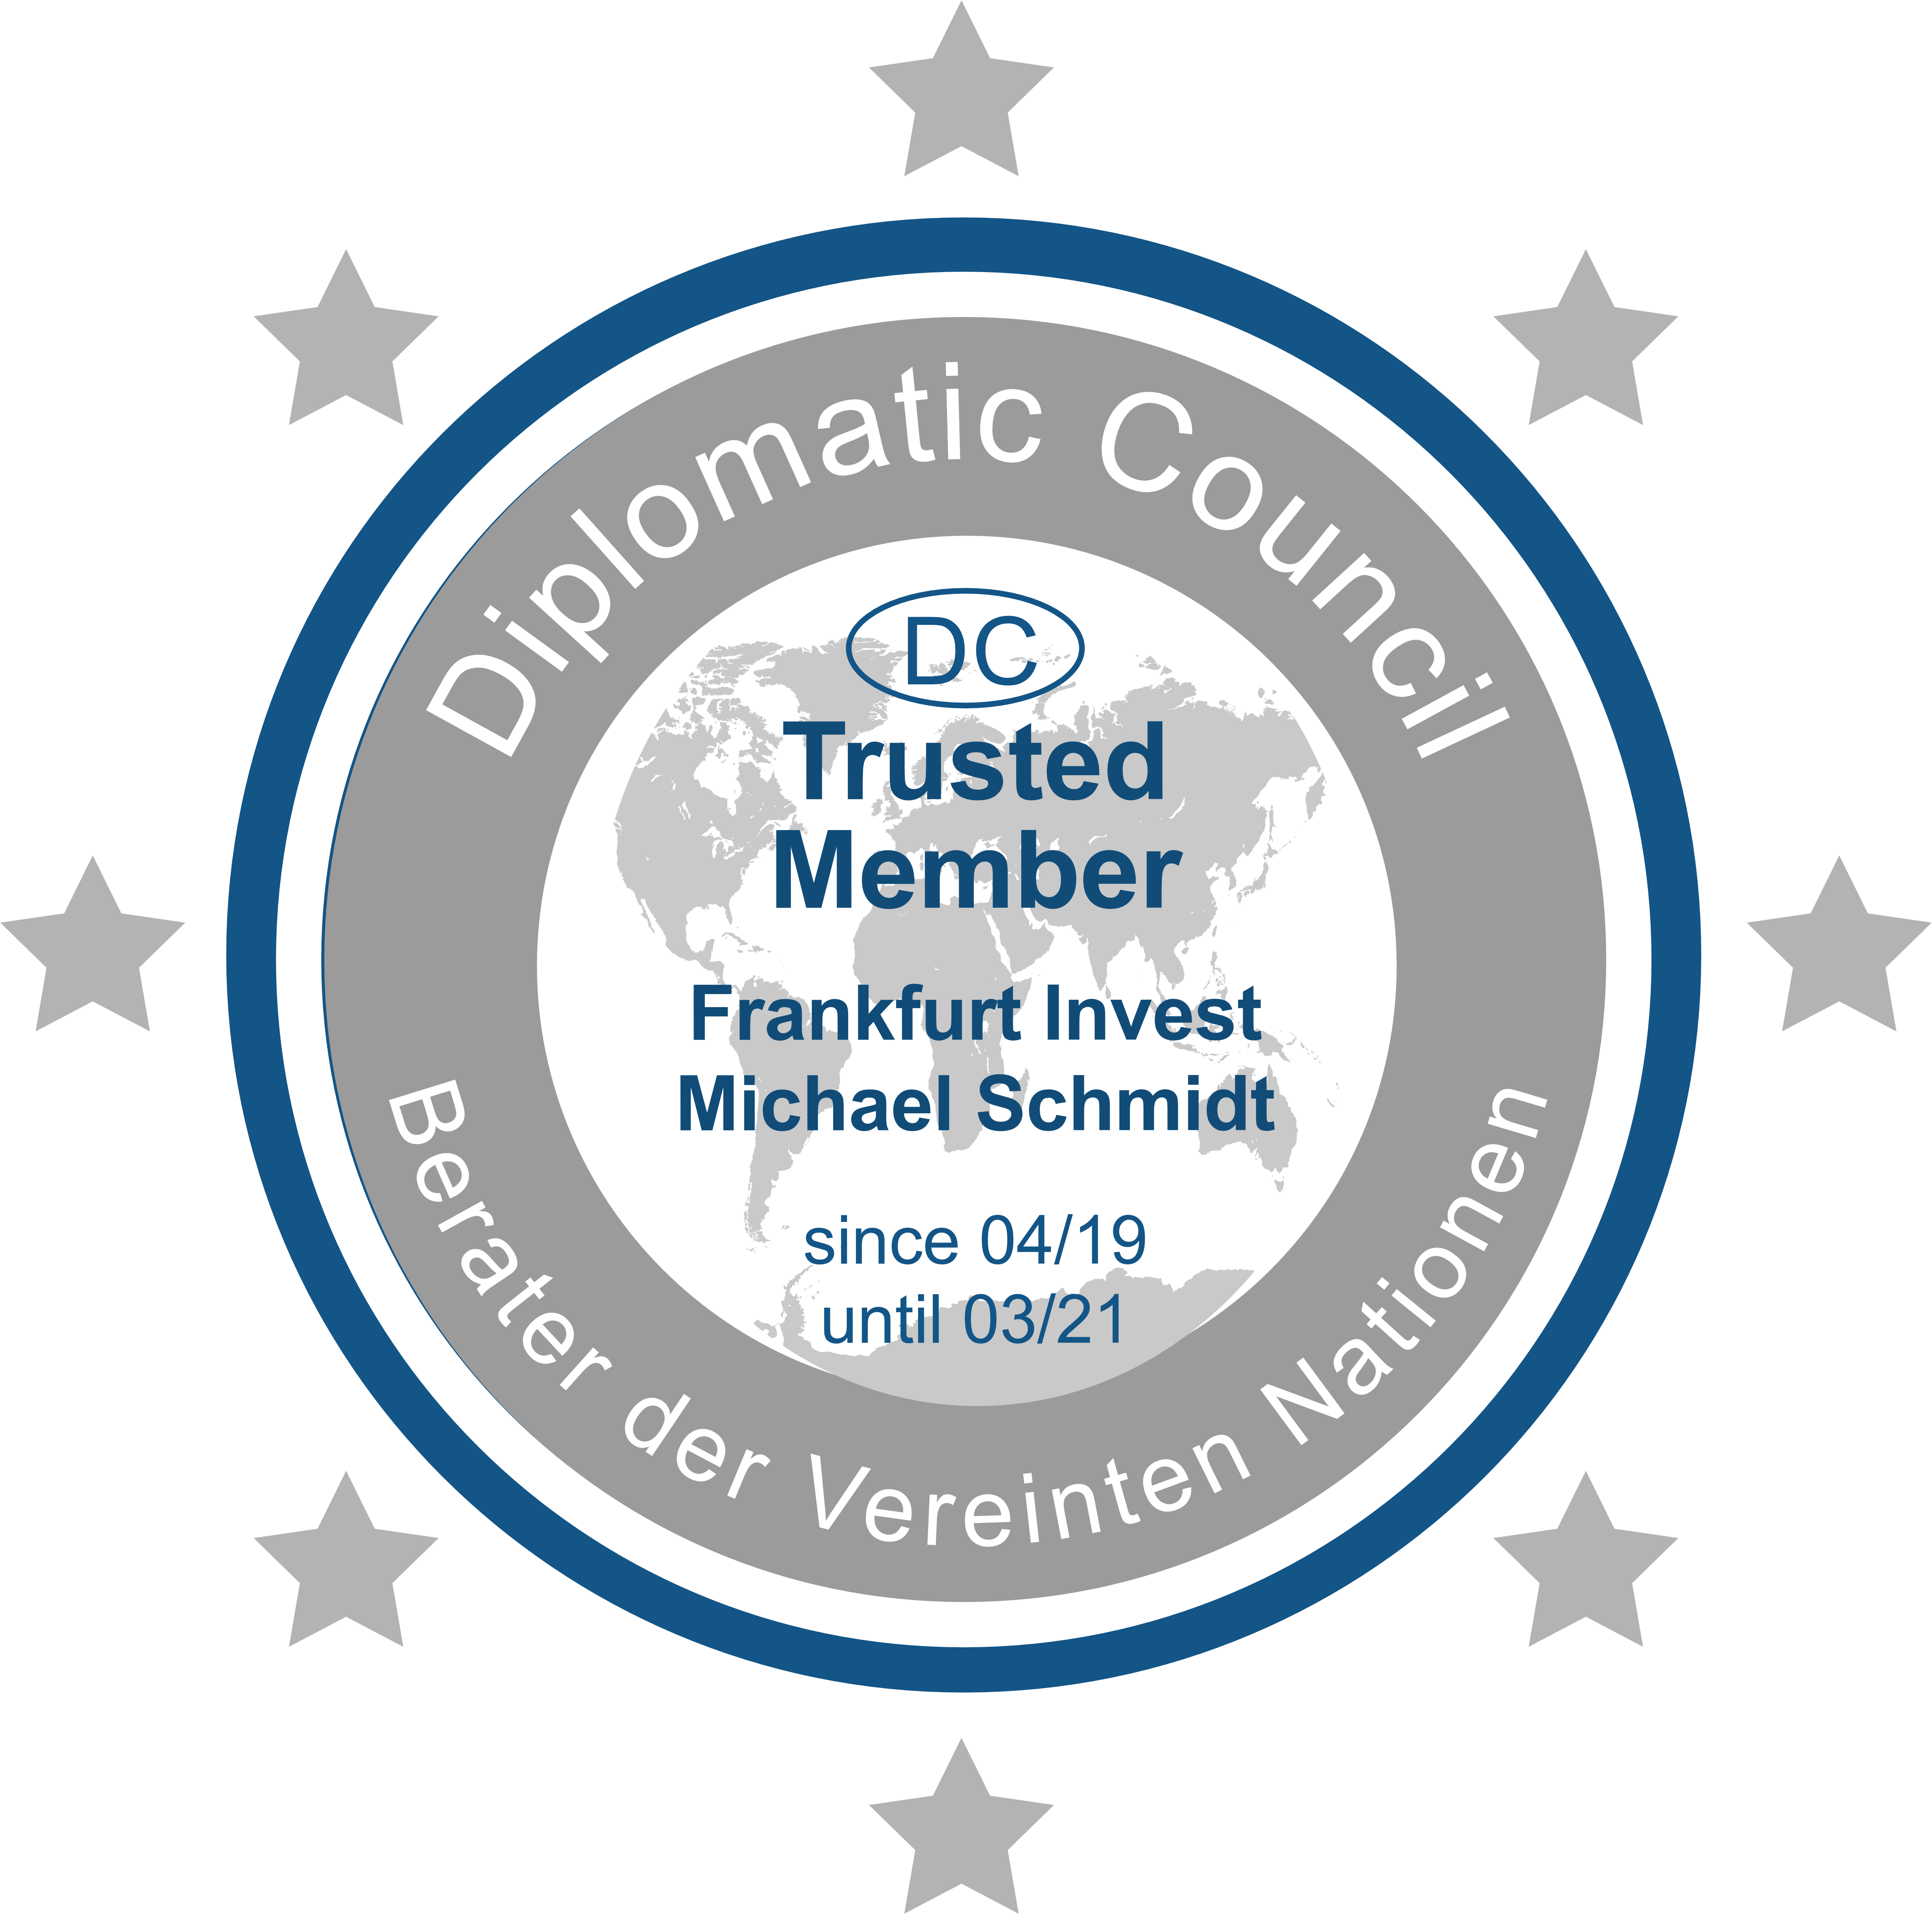 Mitgliedschaft im Diplomatic Council